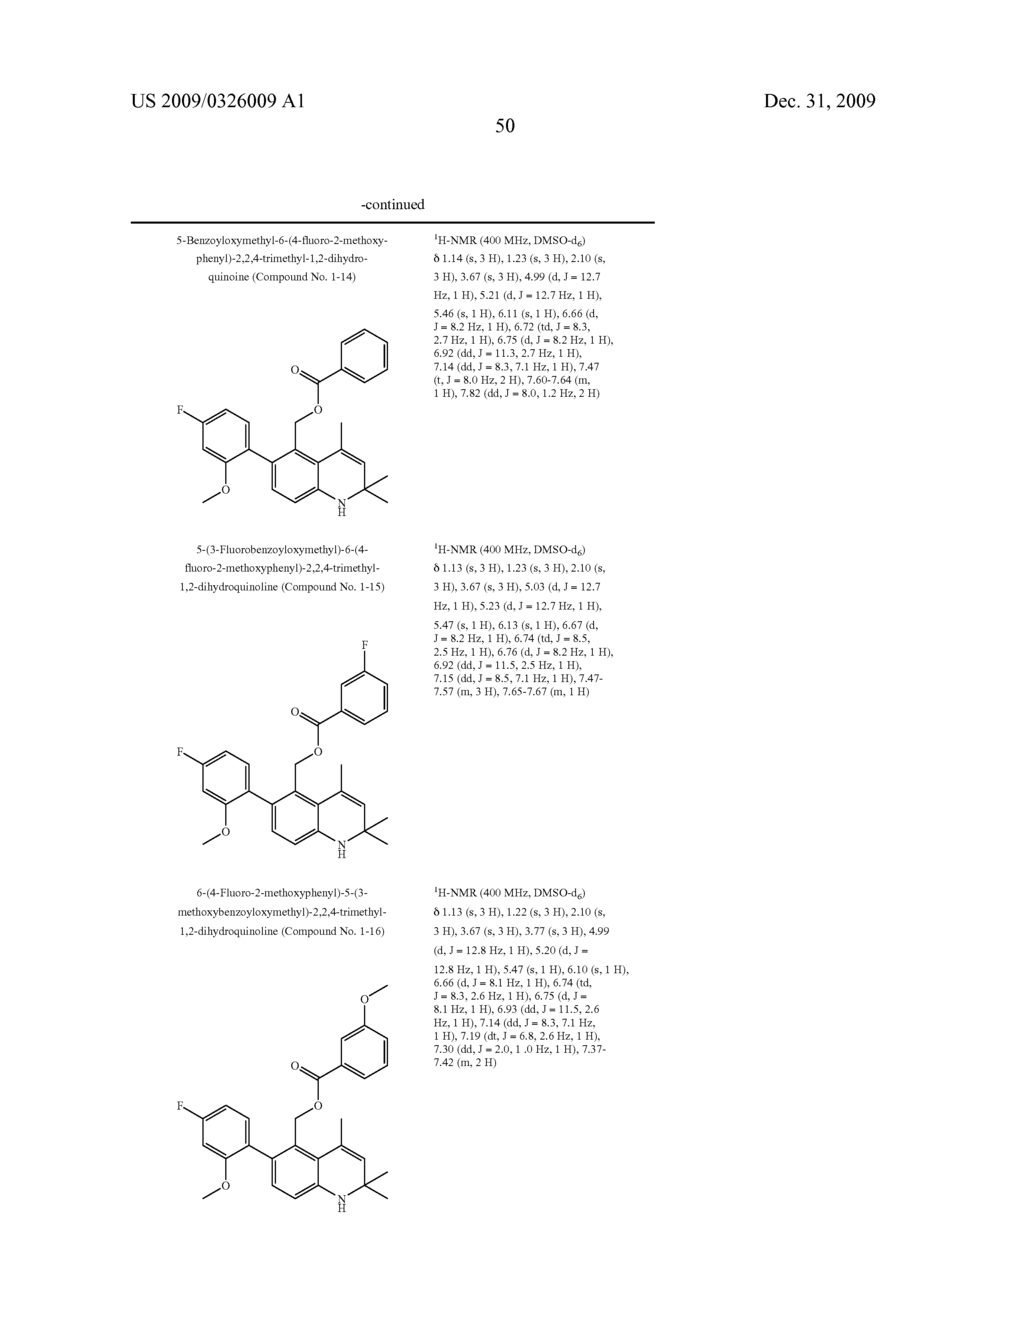 Novel 1-2-Dihydroquinoline Derivative Having Glucocorticoid Receptor Binding Activity - diagram, schematic, and image 51